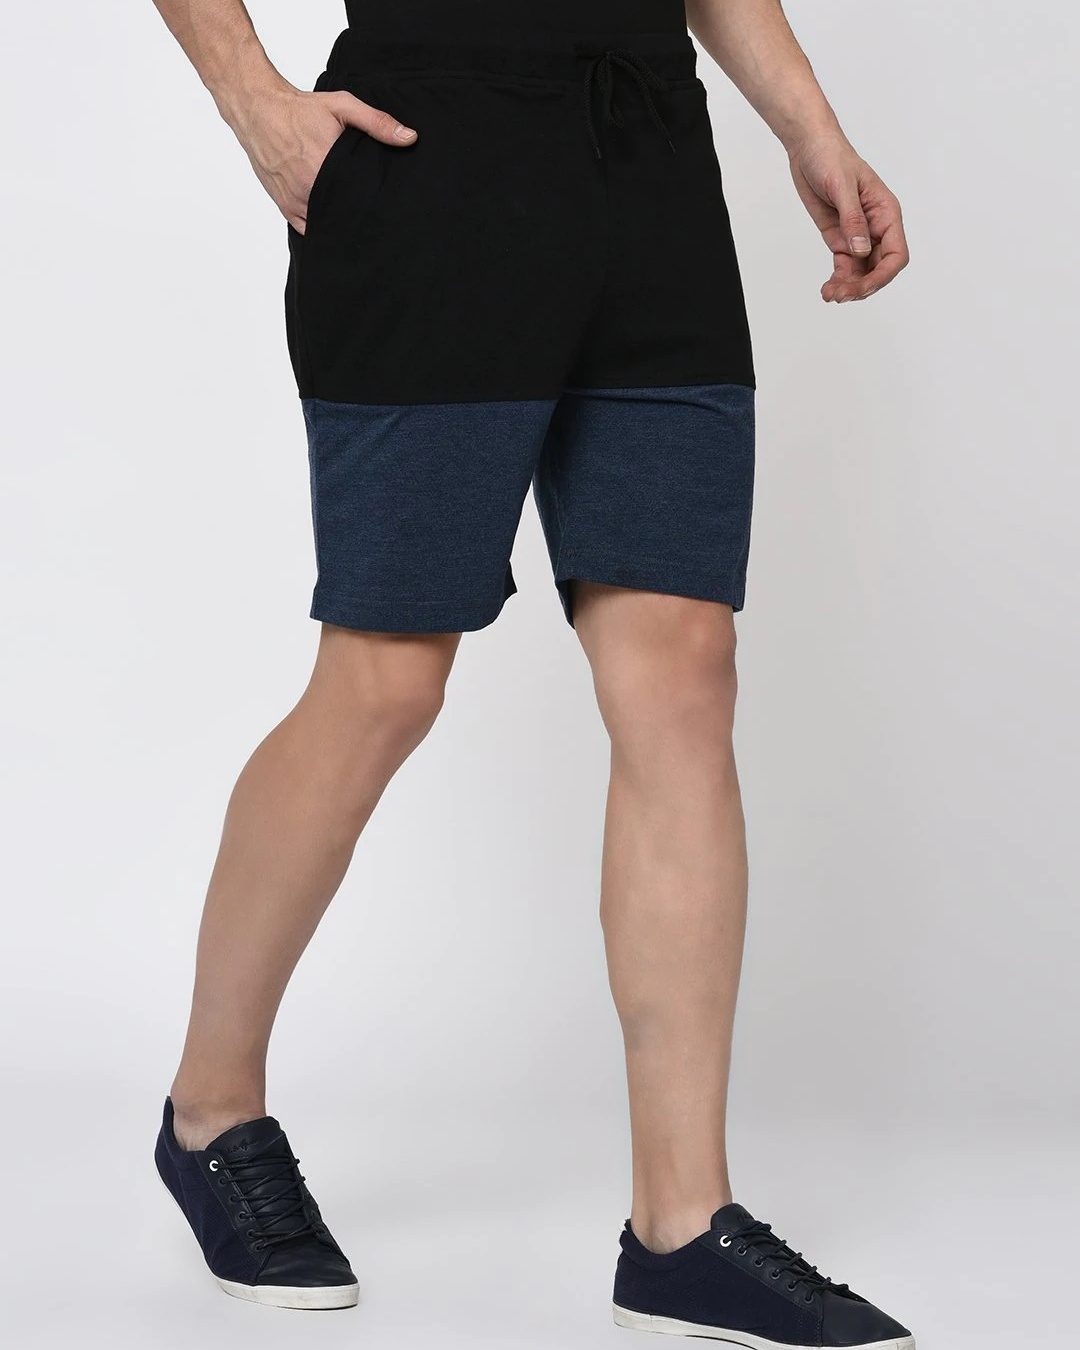 Shop Men's Black & Blue Color Block Shorts-Back